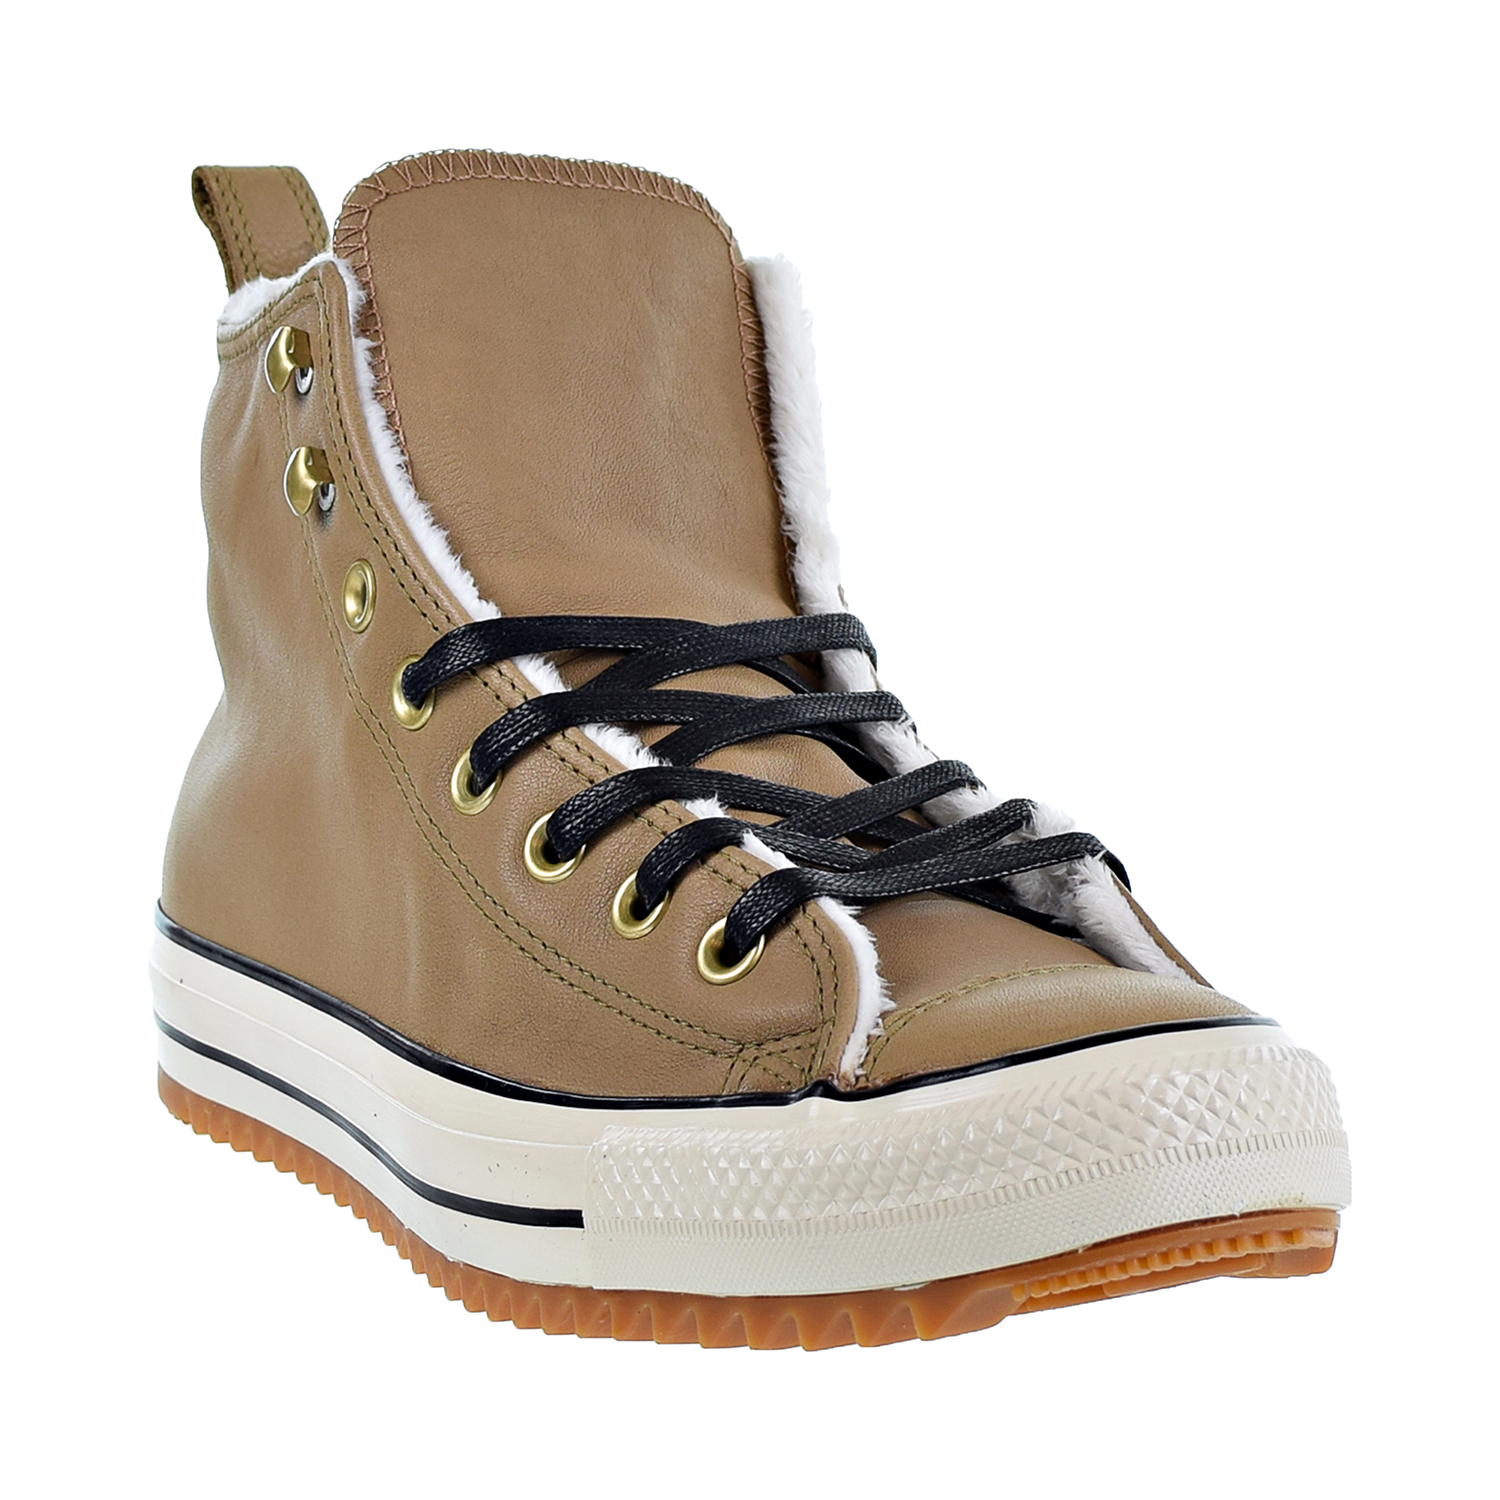 Converse Chuck Taylor All Star Hiker Boot Hi Unisex/Men's Shoes Teak-Black-Ivory 162479c - image 2 of 6